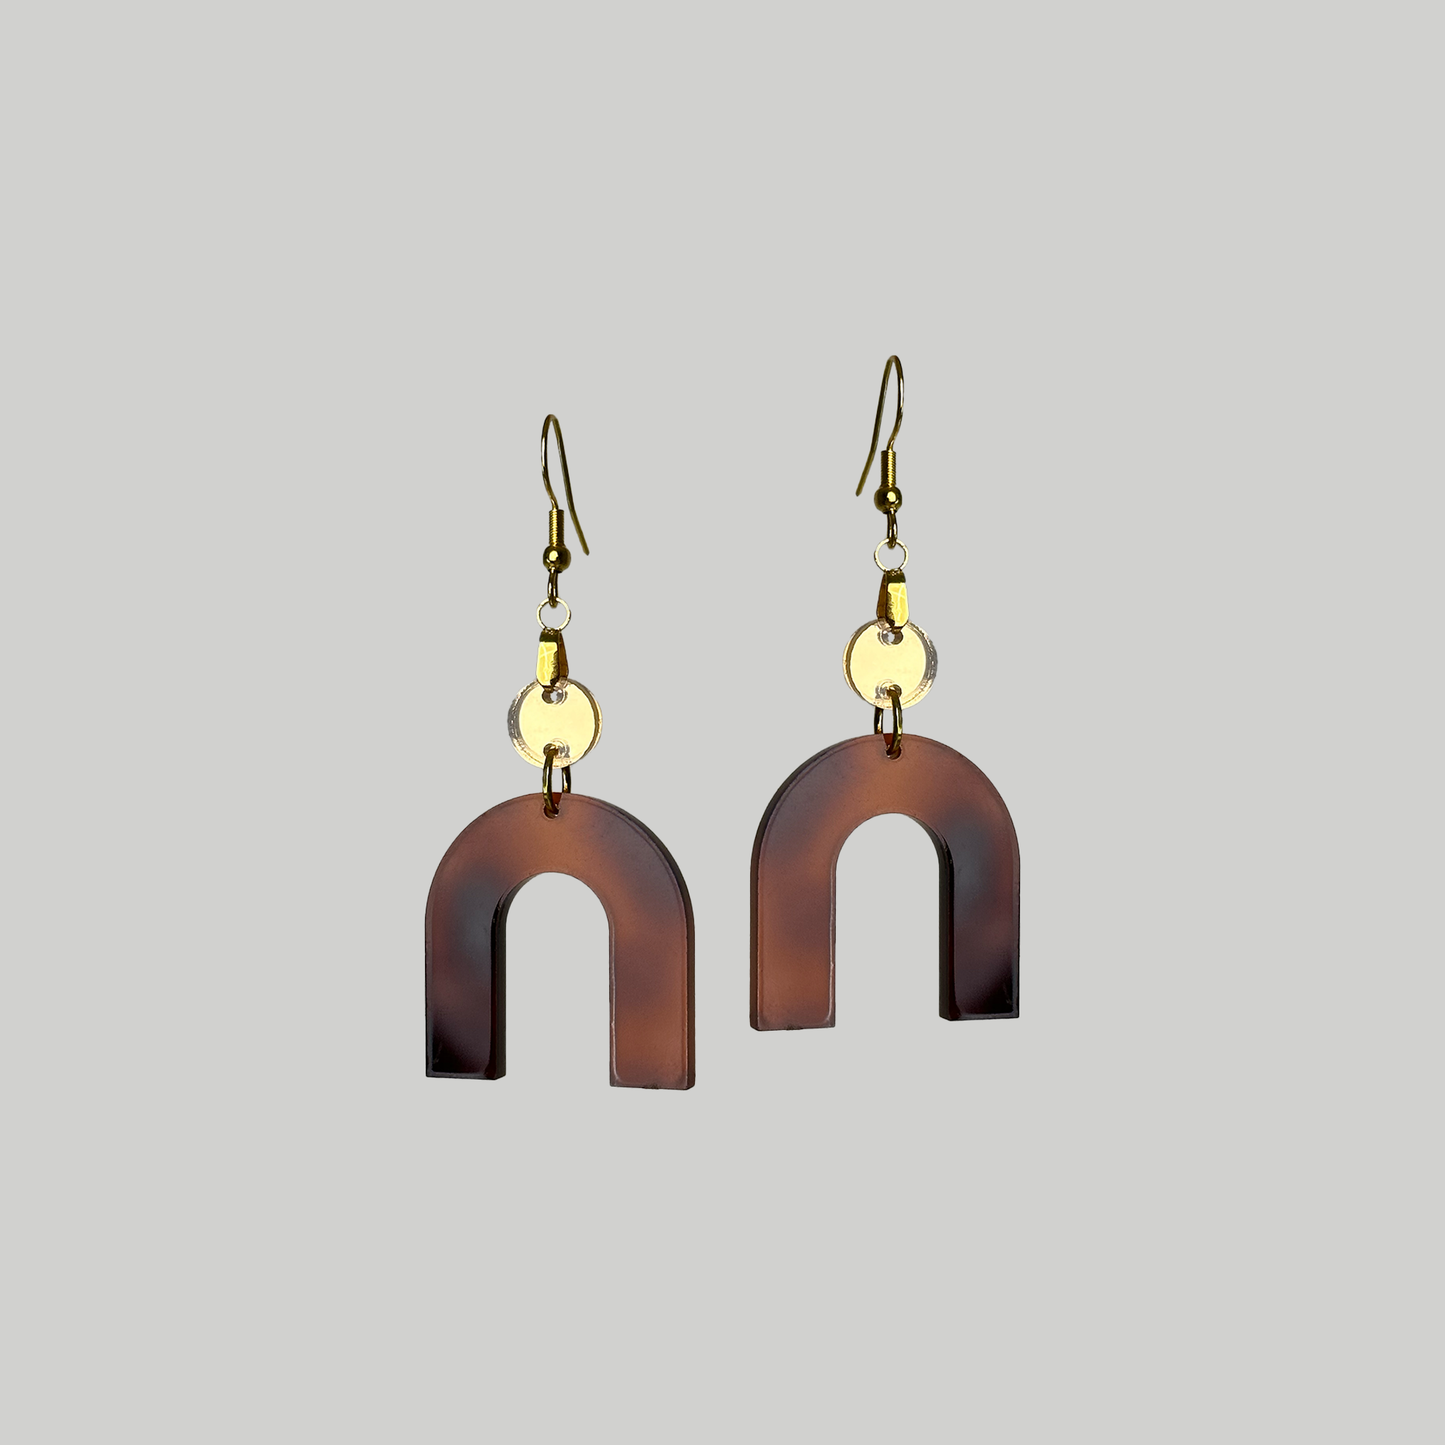 Sleek Minimalist Earrings: Modern and minimalistic earrings for a sleek style.